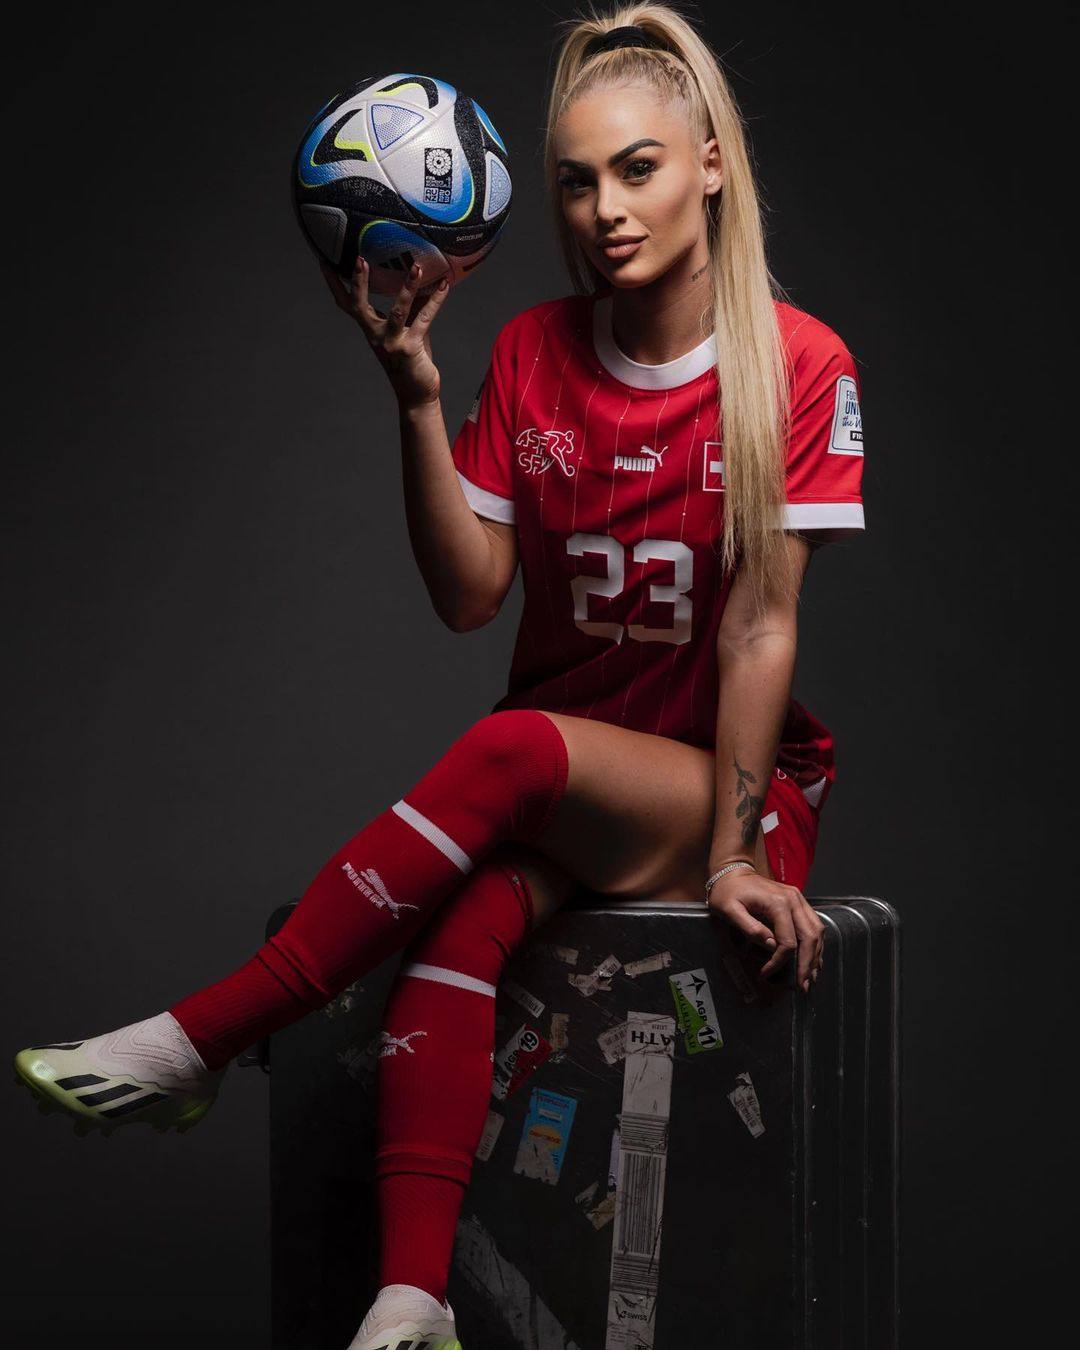 Alisha Lehmann is a Swiss footballer who plays for Women’s Super League club Aston Villa. Photo: @alishalehmann7/Instagram